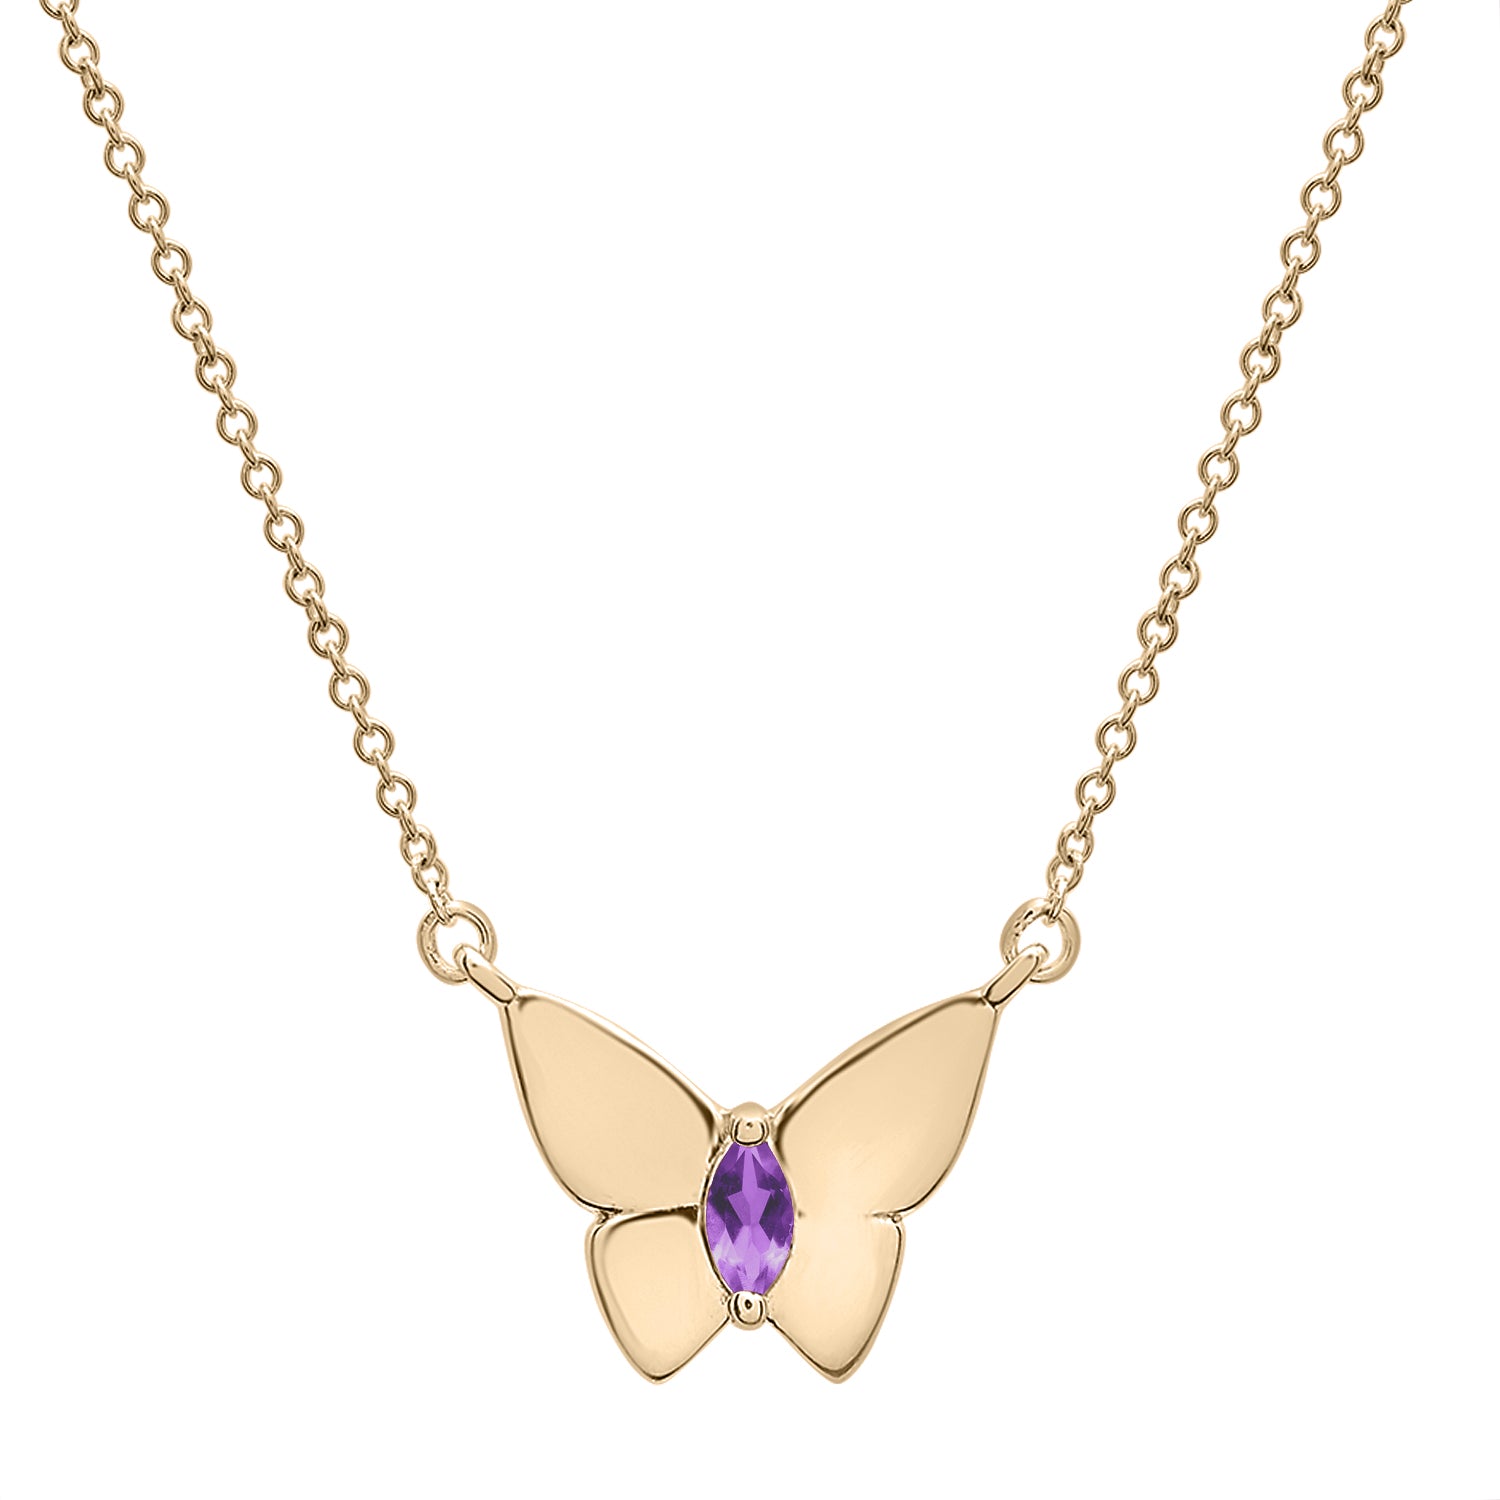 Dark purple Stone Butterfly Birthstone Necklace in Gold chain